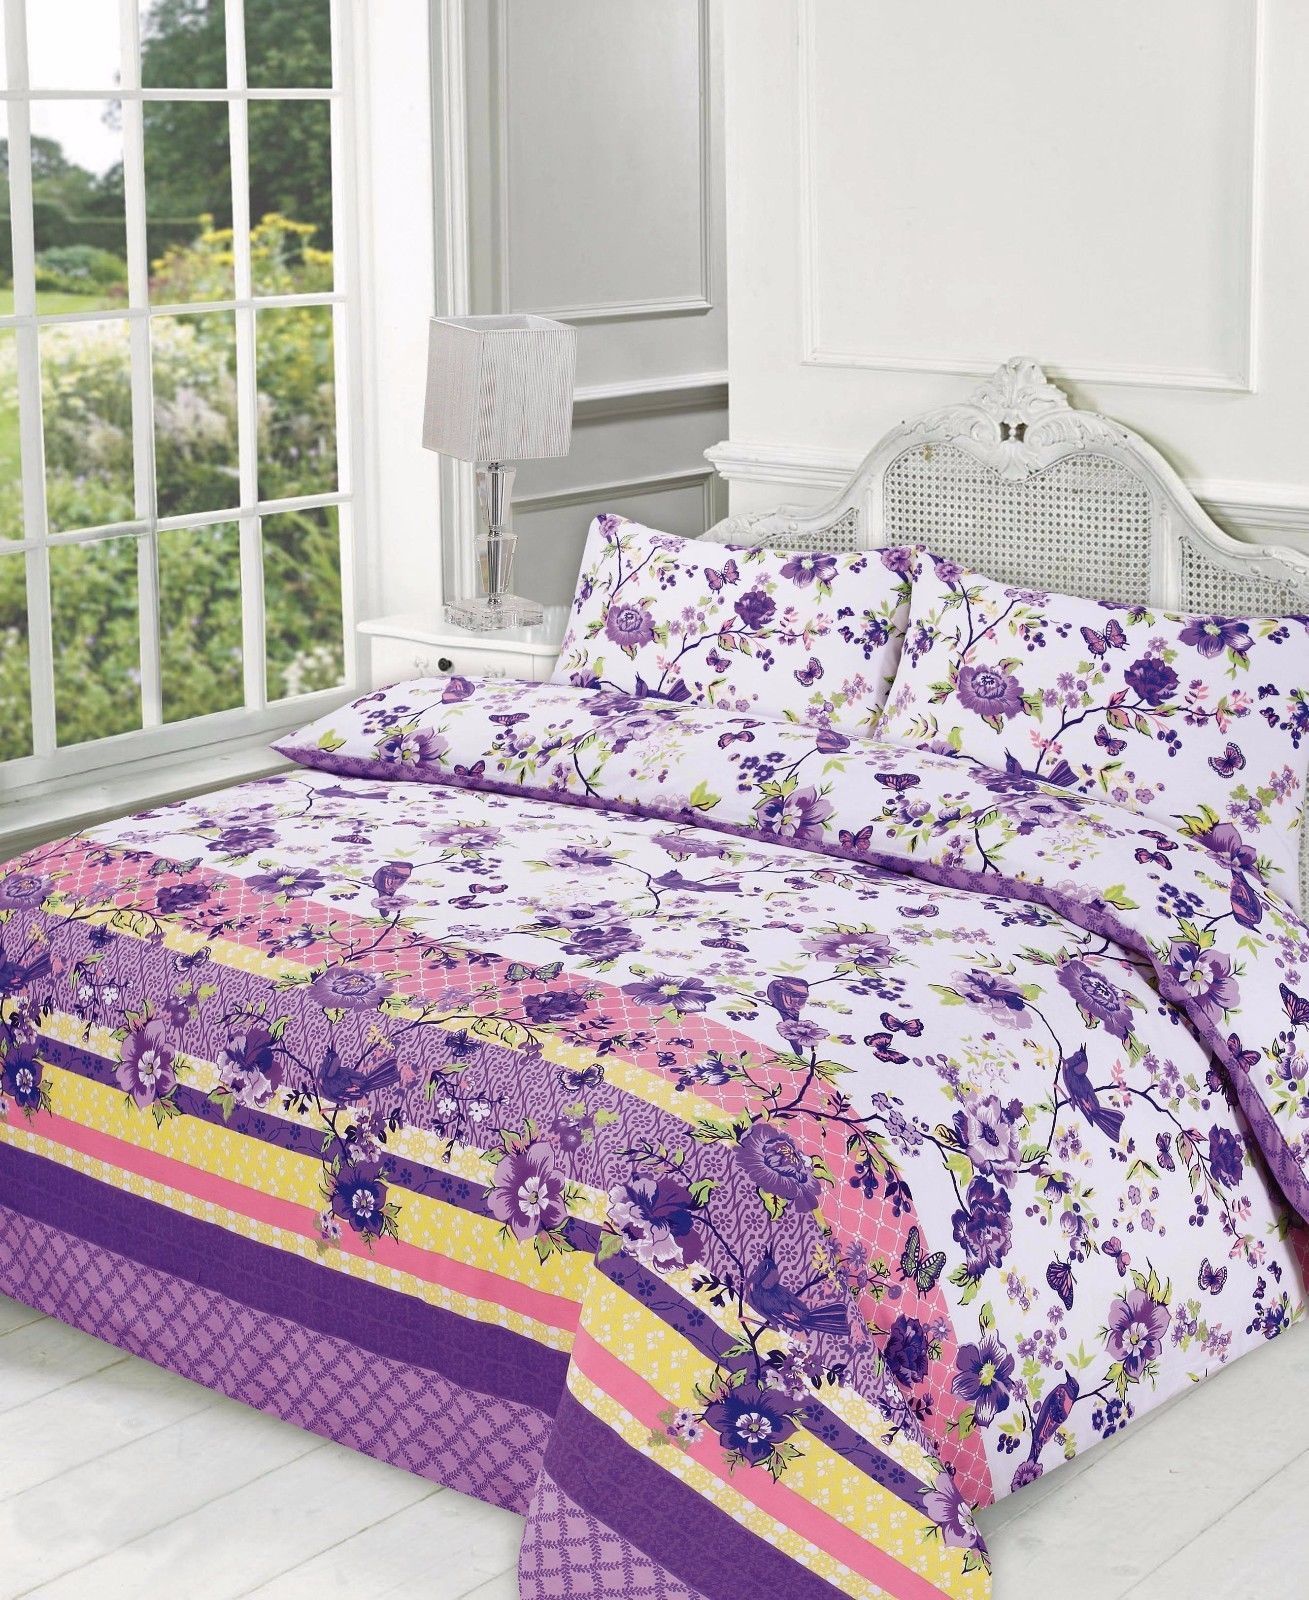 Floral Blossom Duvet Cover Set With Pillow Cases Printed De Lavish